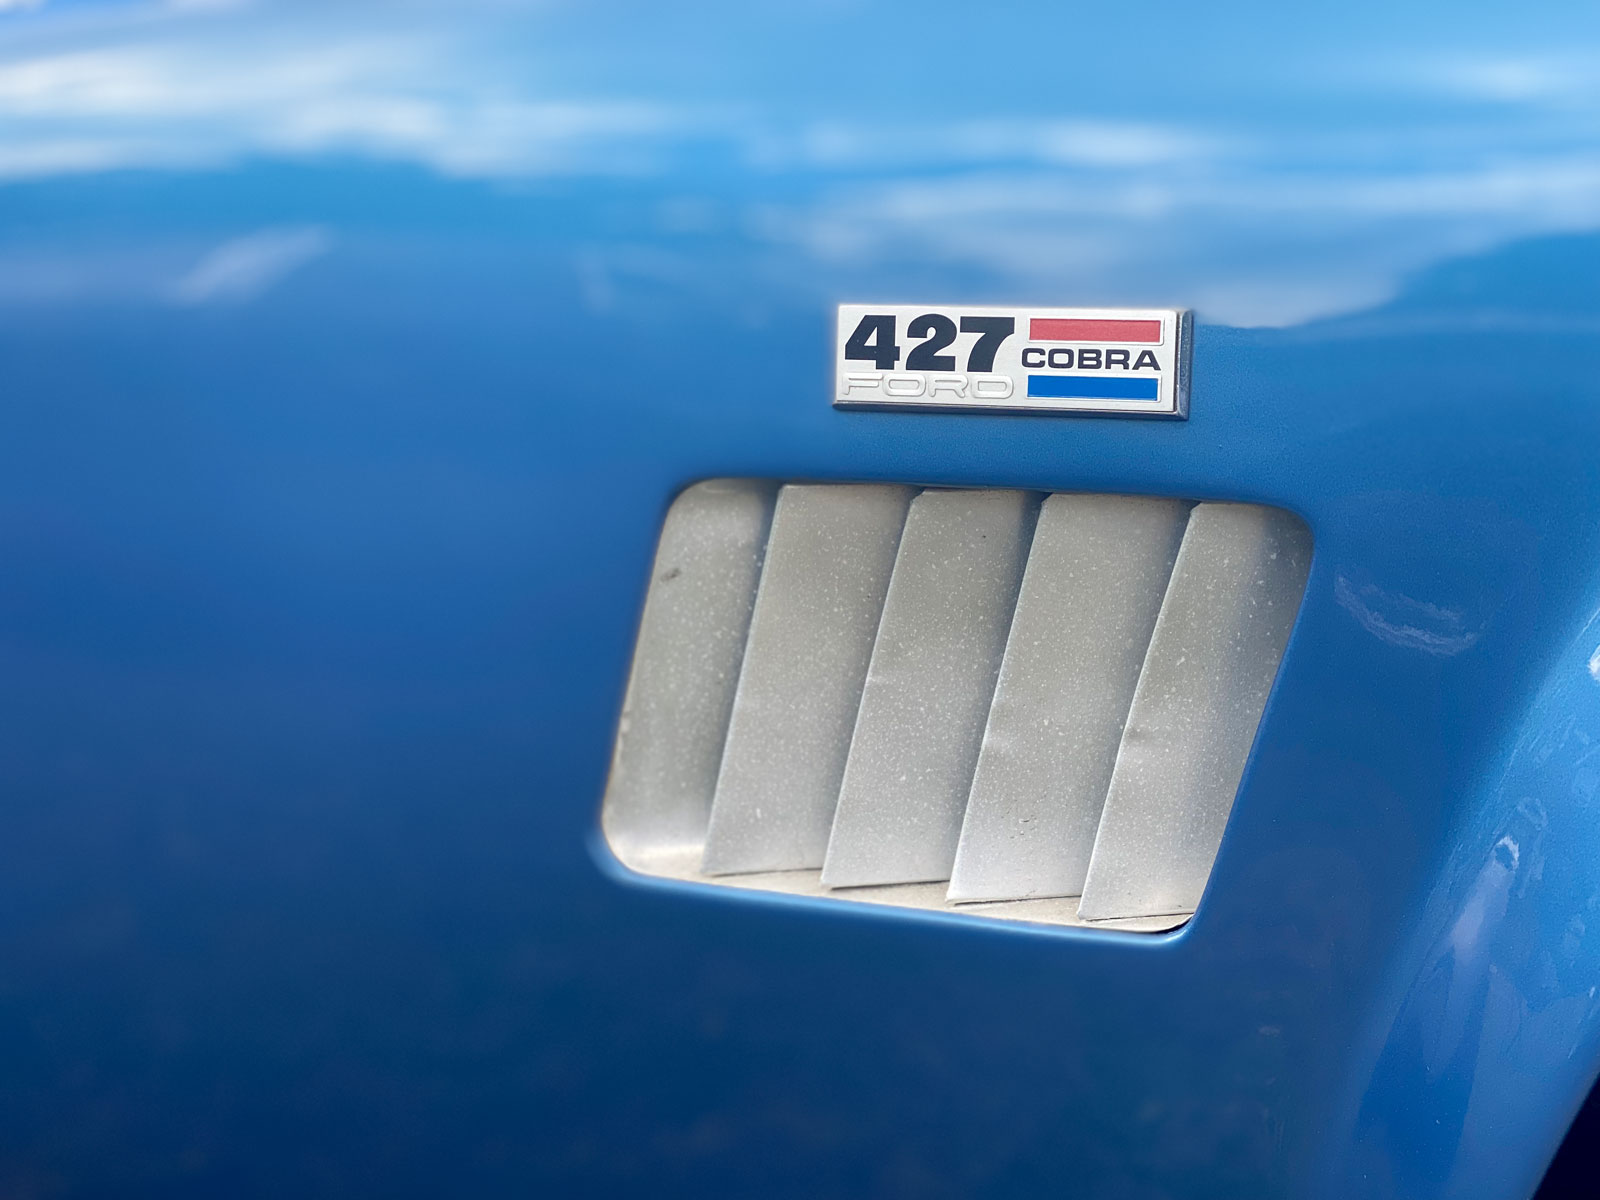 427-ford-Cobra-badge on blue AC Shelby Cobra